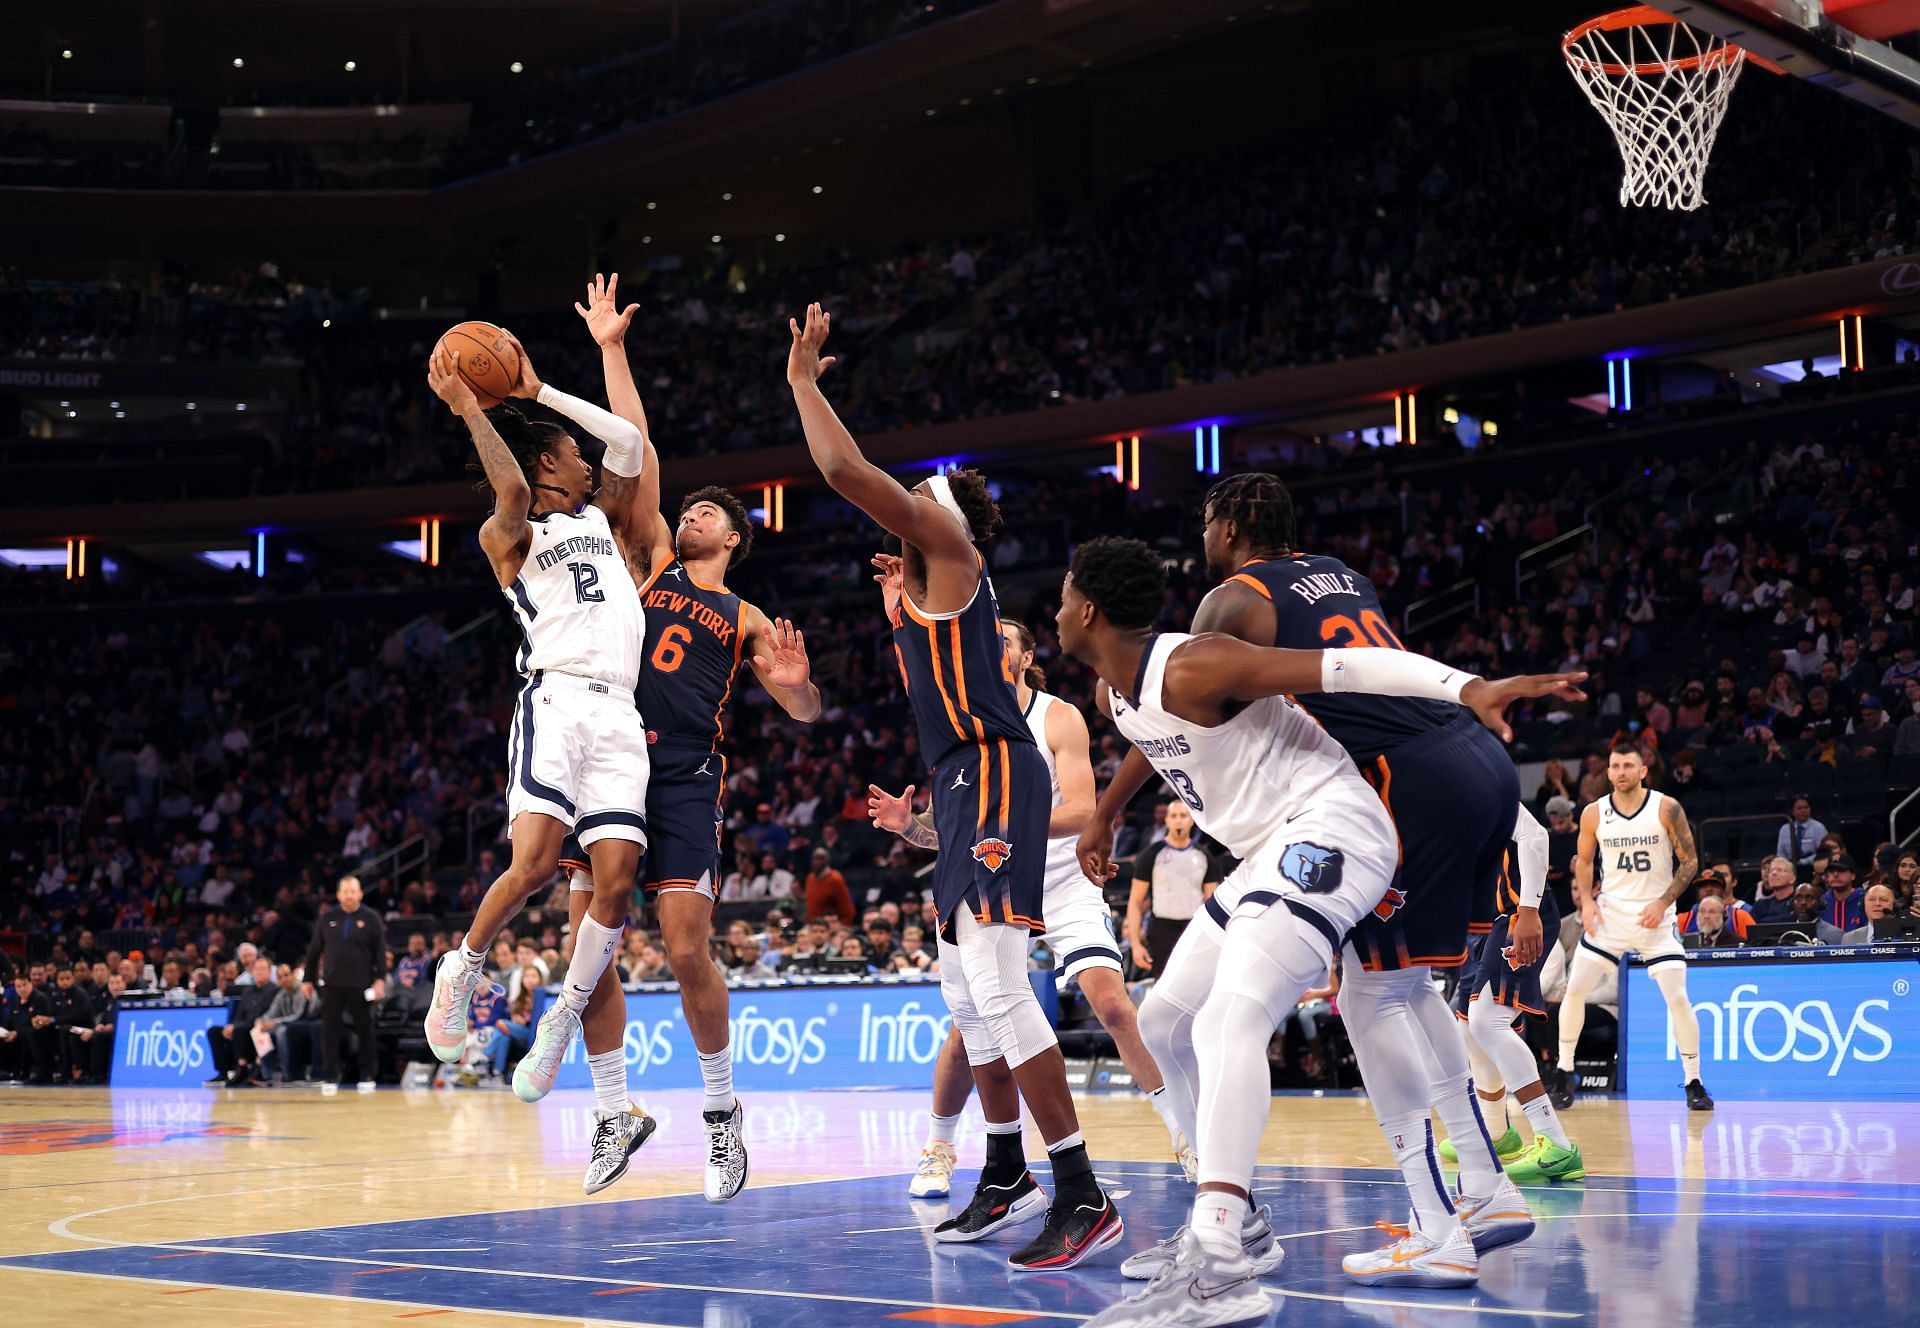 New York Knicks vs Memphis Grizzlies starting lineups and depth chart